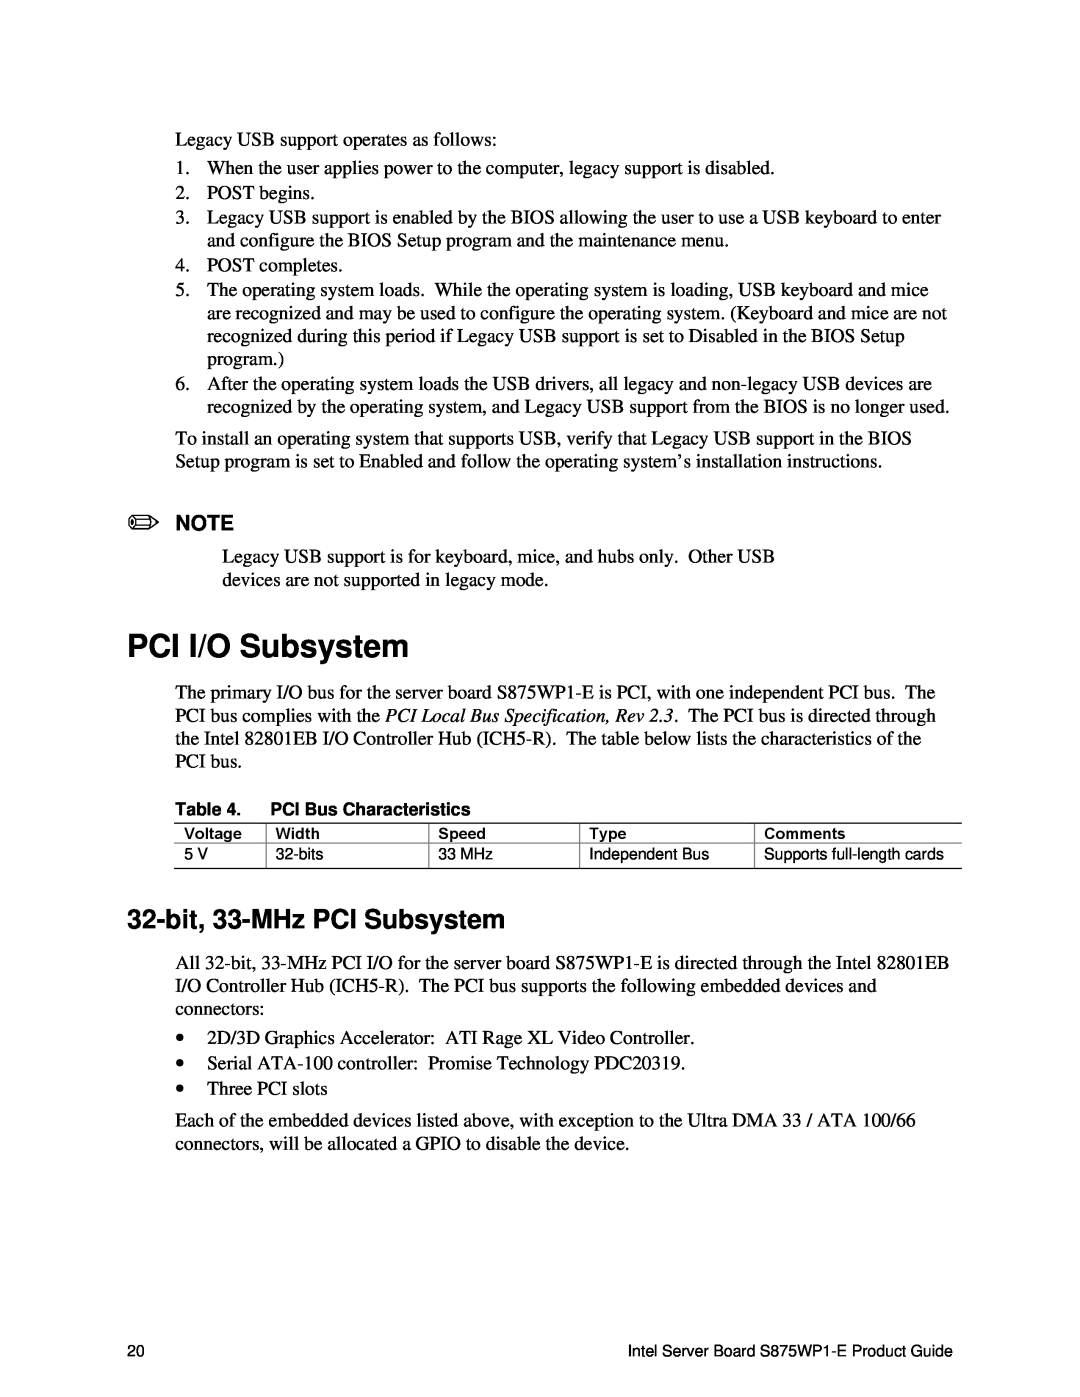 Intel S875WP1-E manual PCI I/O Subsystem, 32-bit, 33-MHz PCI Subsystem 